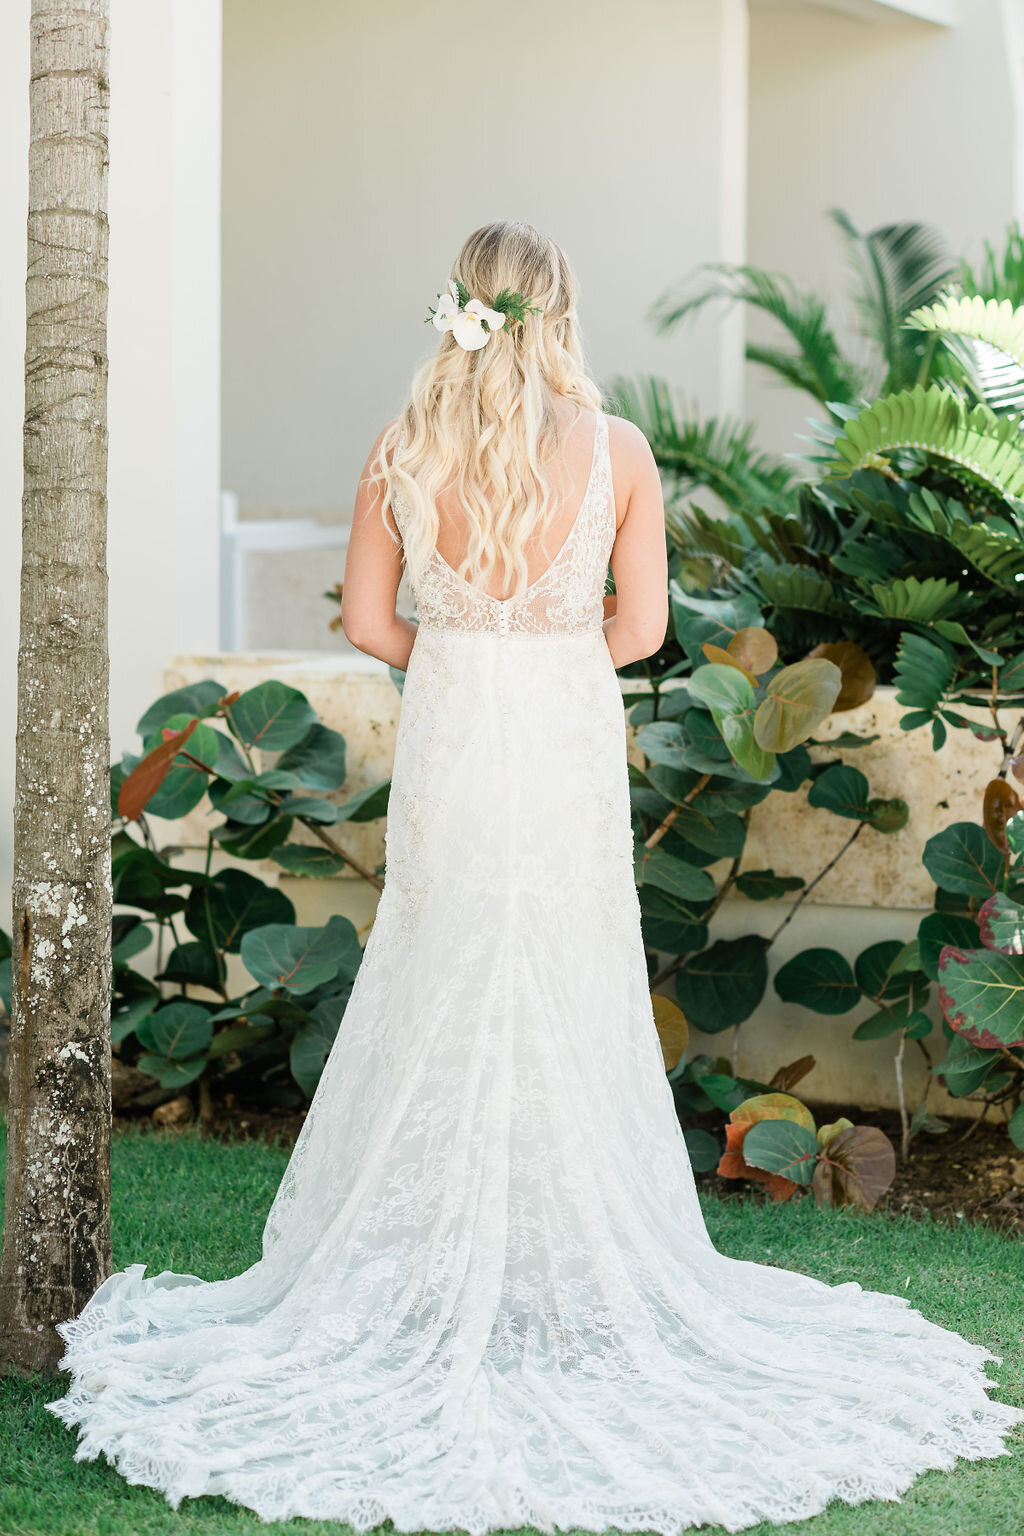 Back of bride in her wedding dress